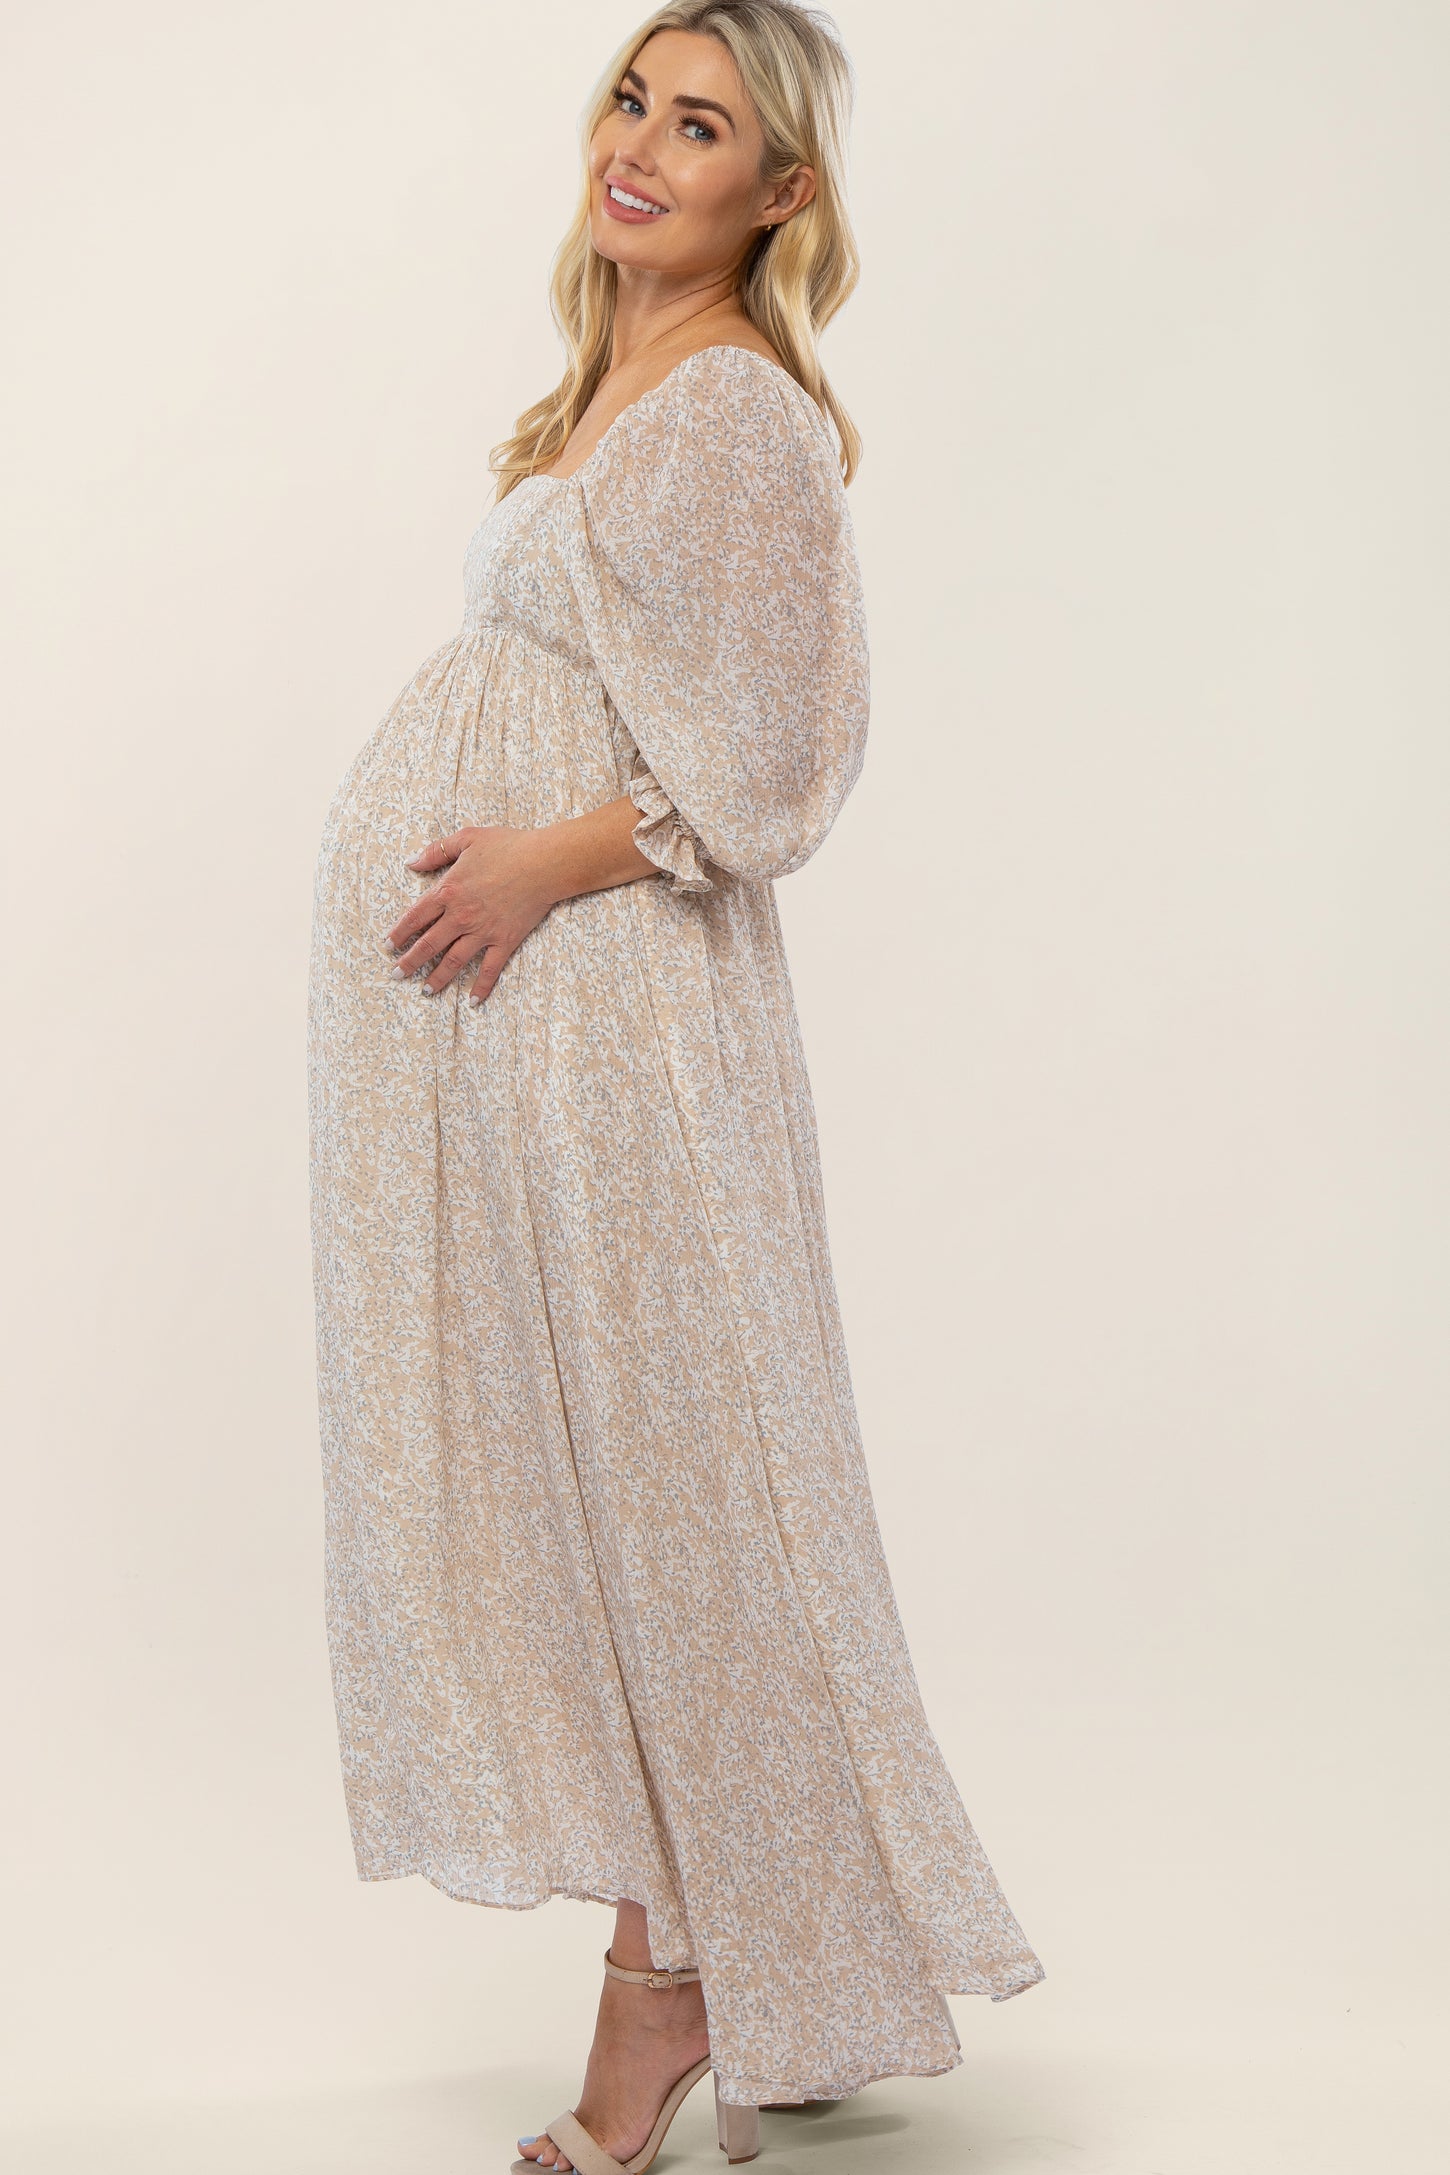 Beige Chiffon Printed Square Neck Empire Maternity Maxi Dress– PinkBlush